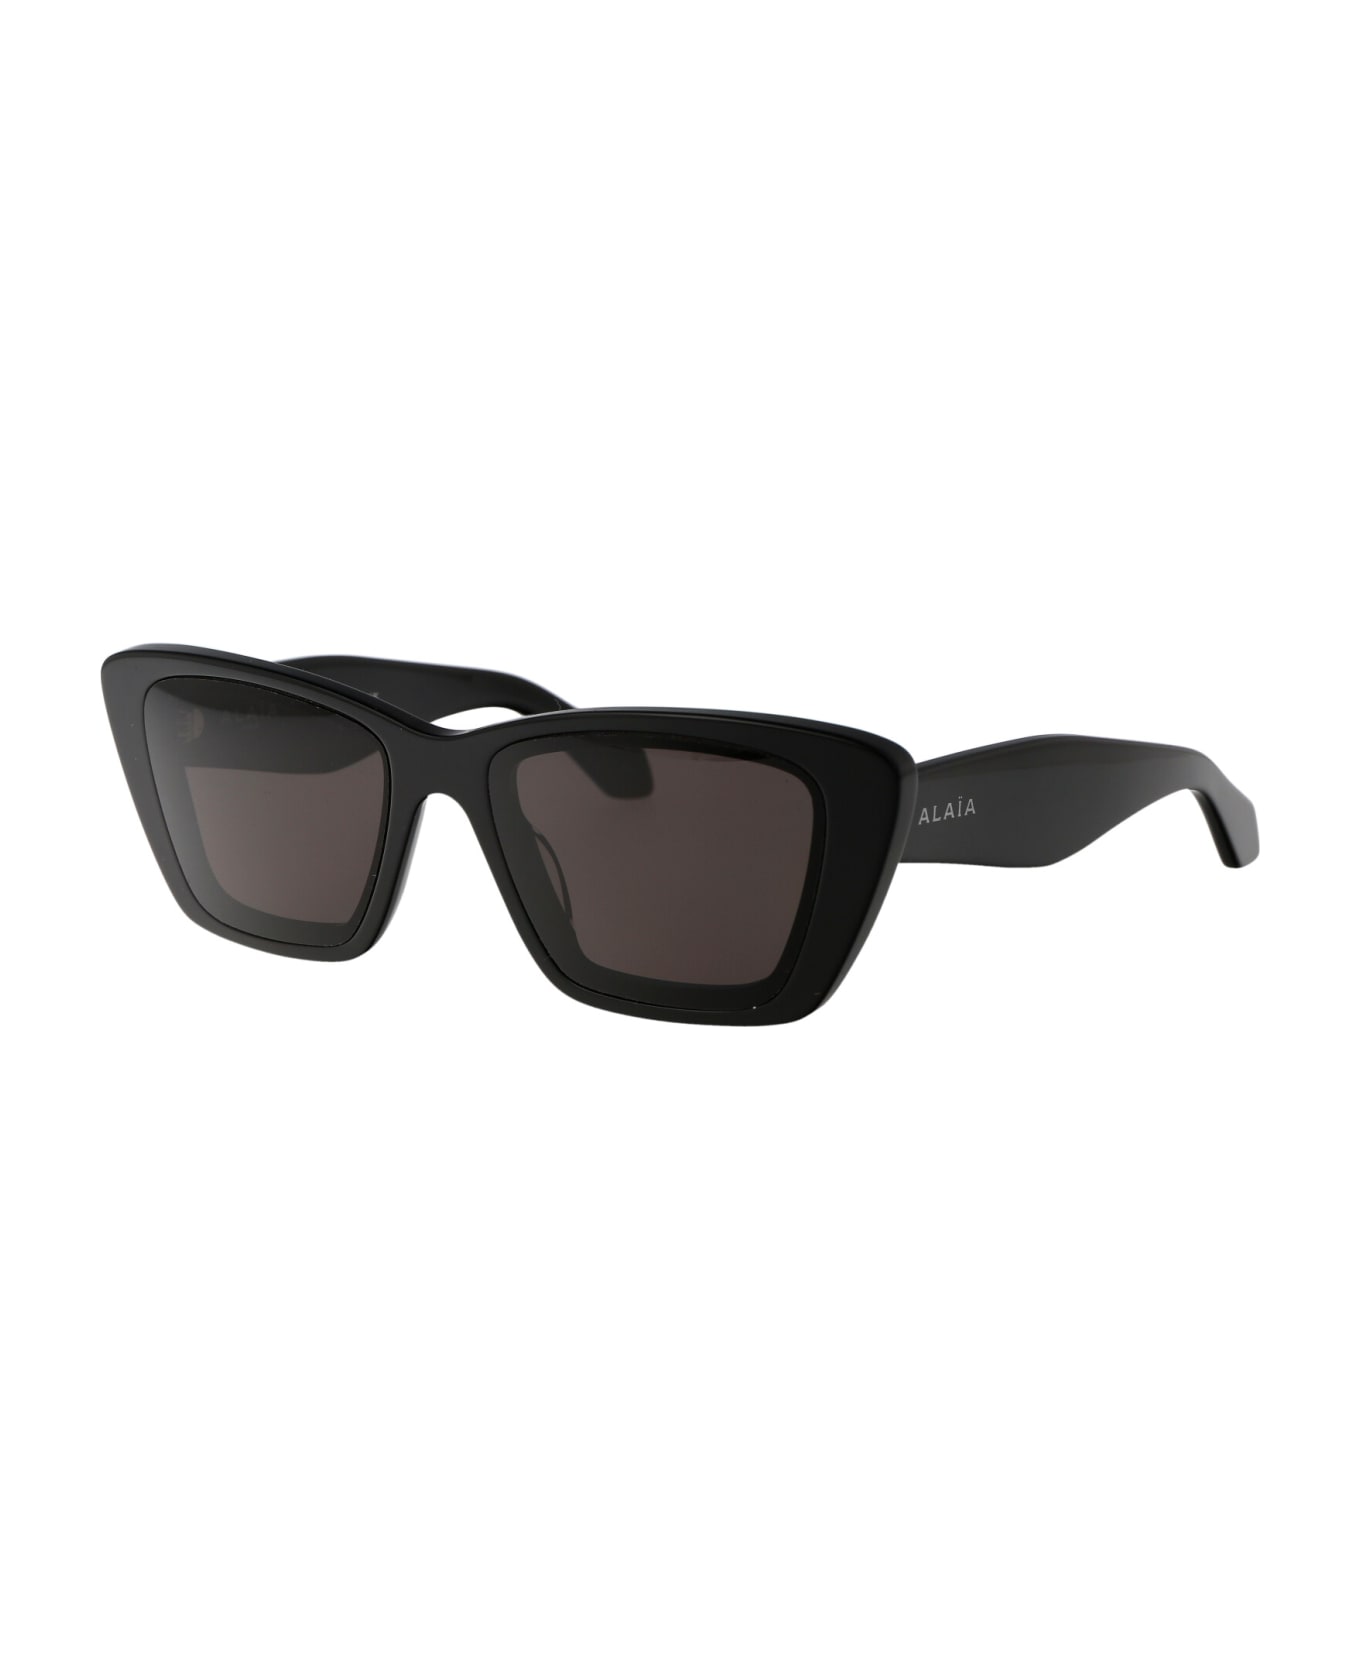 Alaia Aa0070s Sunglasses - 001 BLACK BLACK GREY